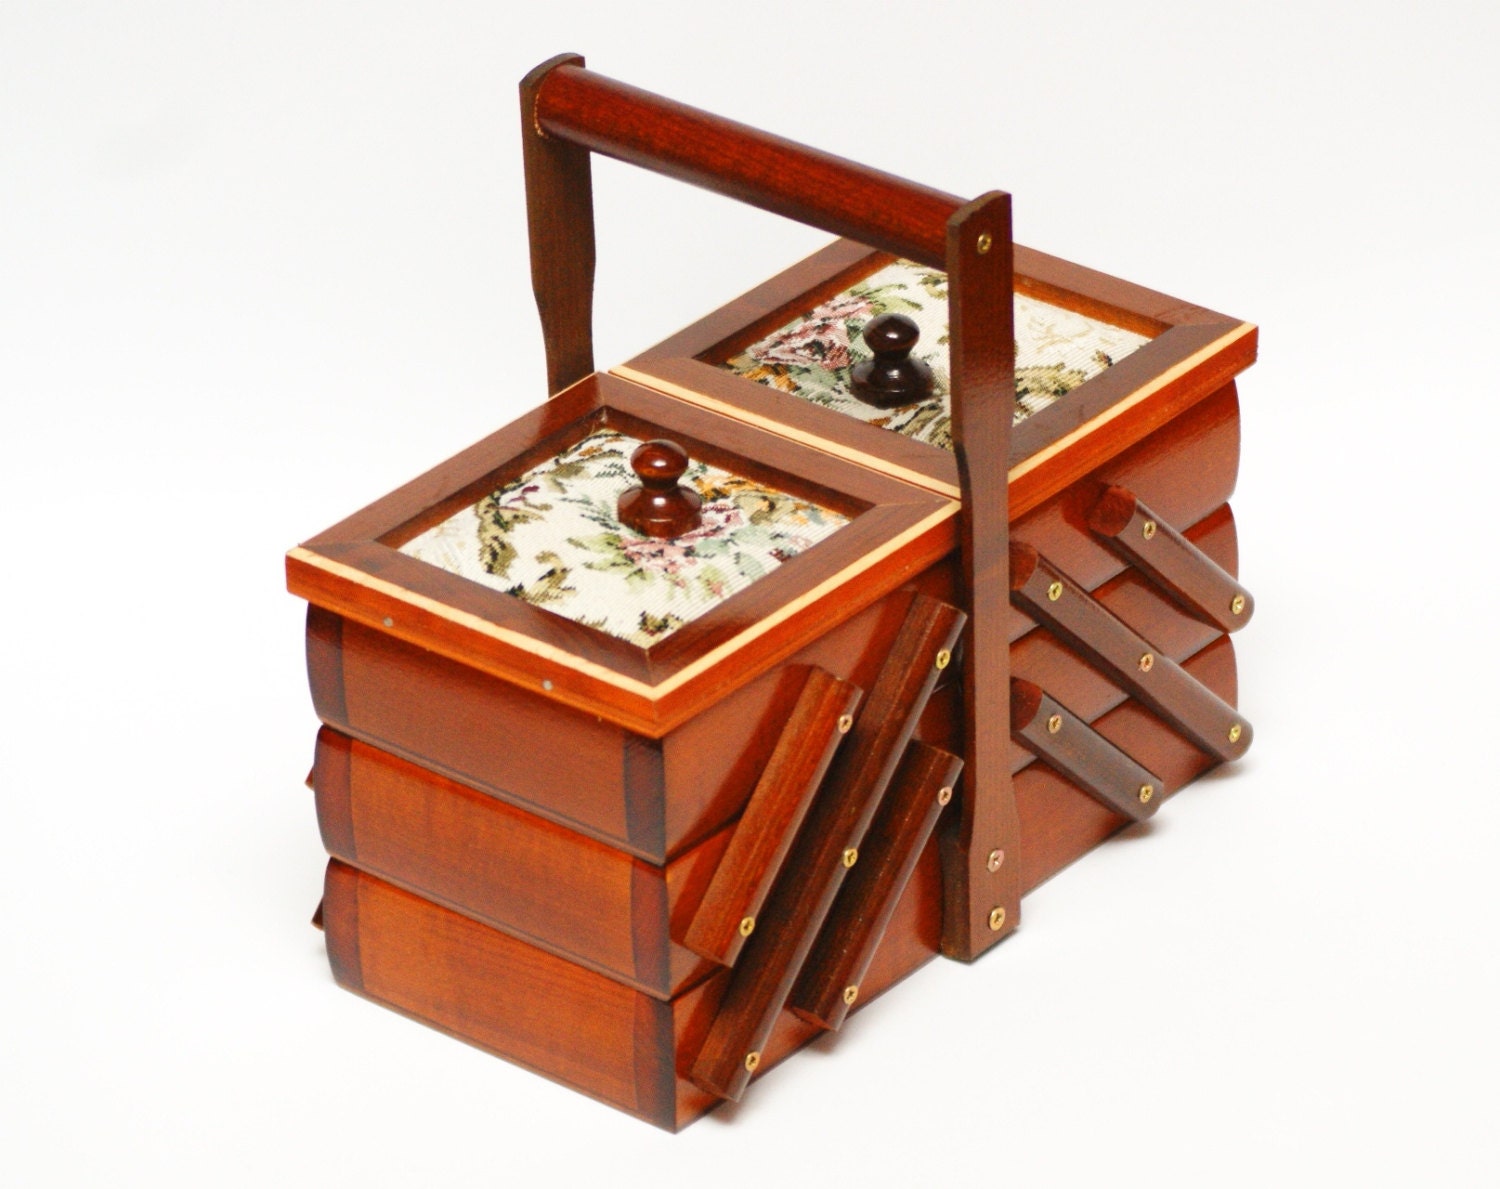 Brown Sewing Box Accordion, Wood Sewing Box, Large Sewing Kit Organizer,  Make up Storage, Fold Out Storage Box, Jewelry Casket, Simply Box 